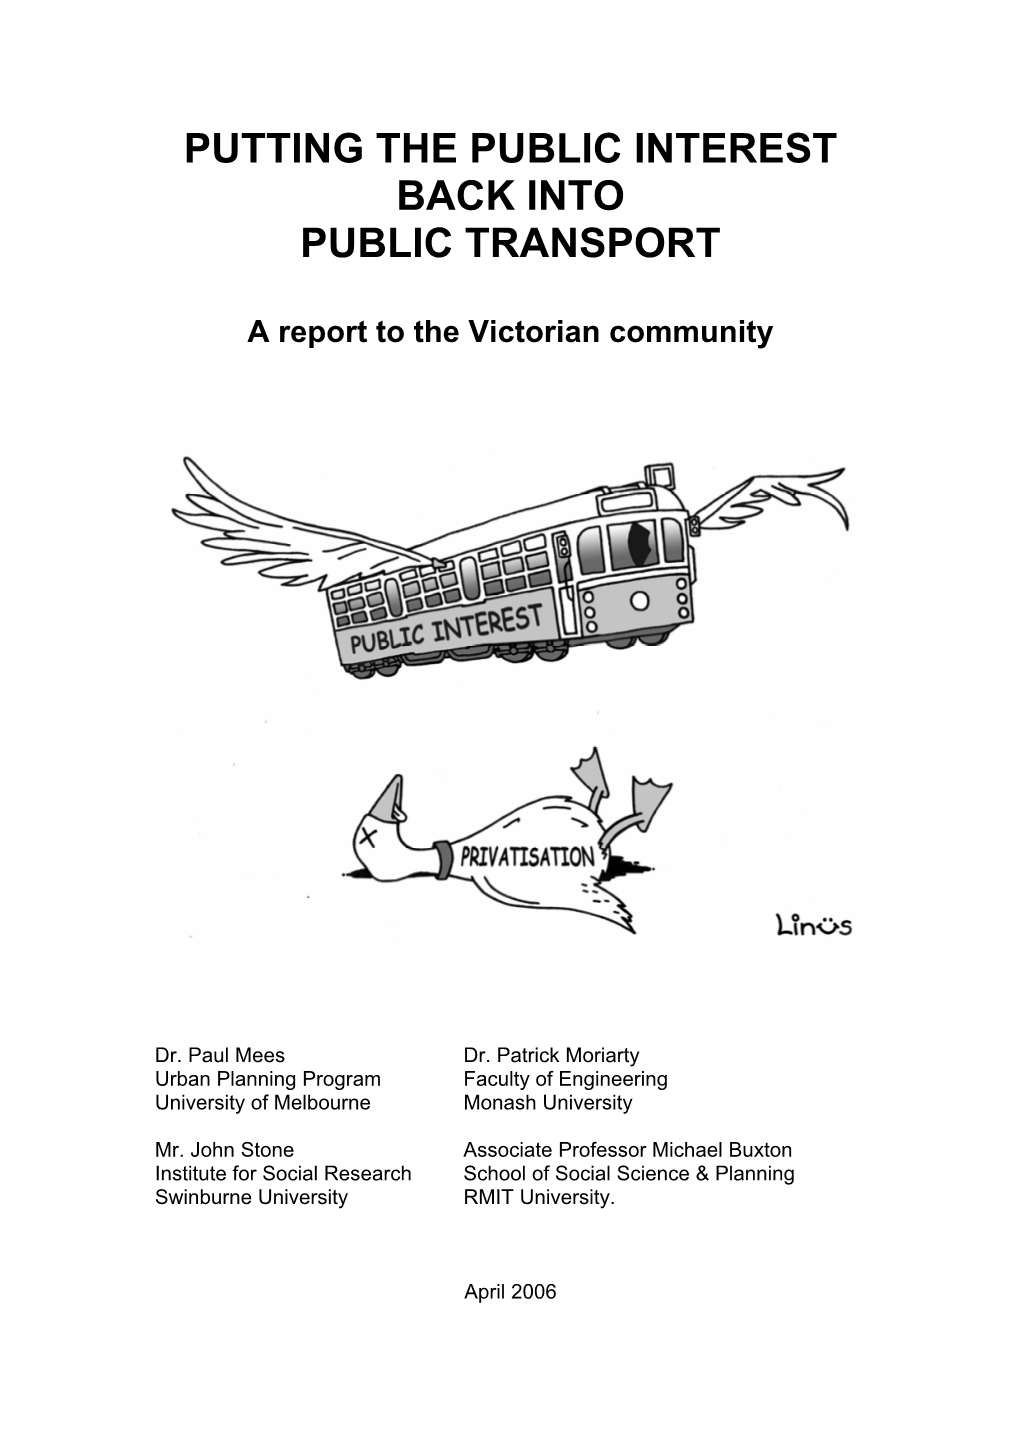 Putting the Public Interest Back Into Public Transport